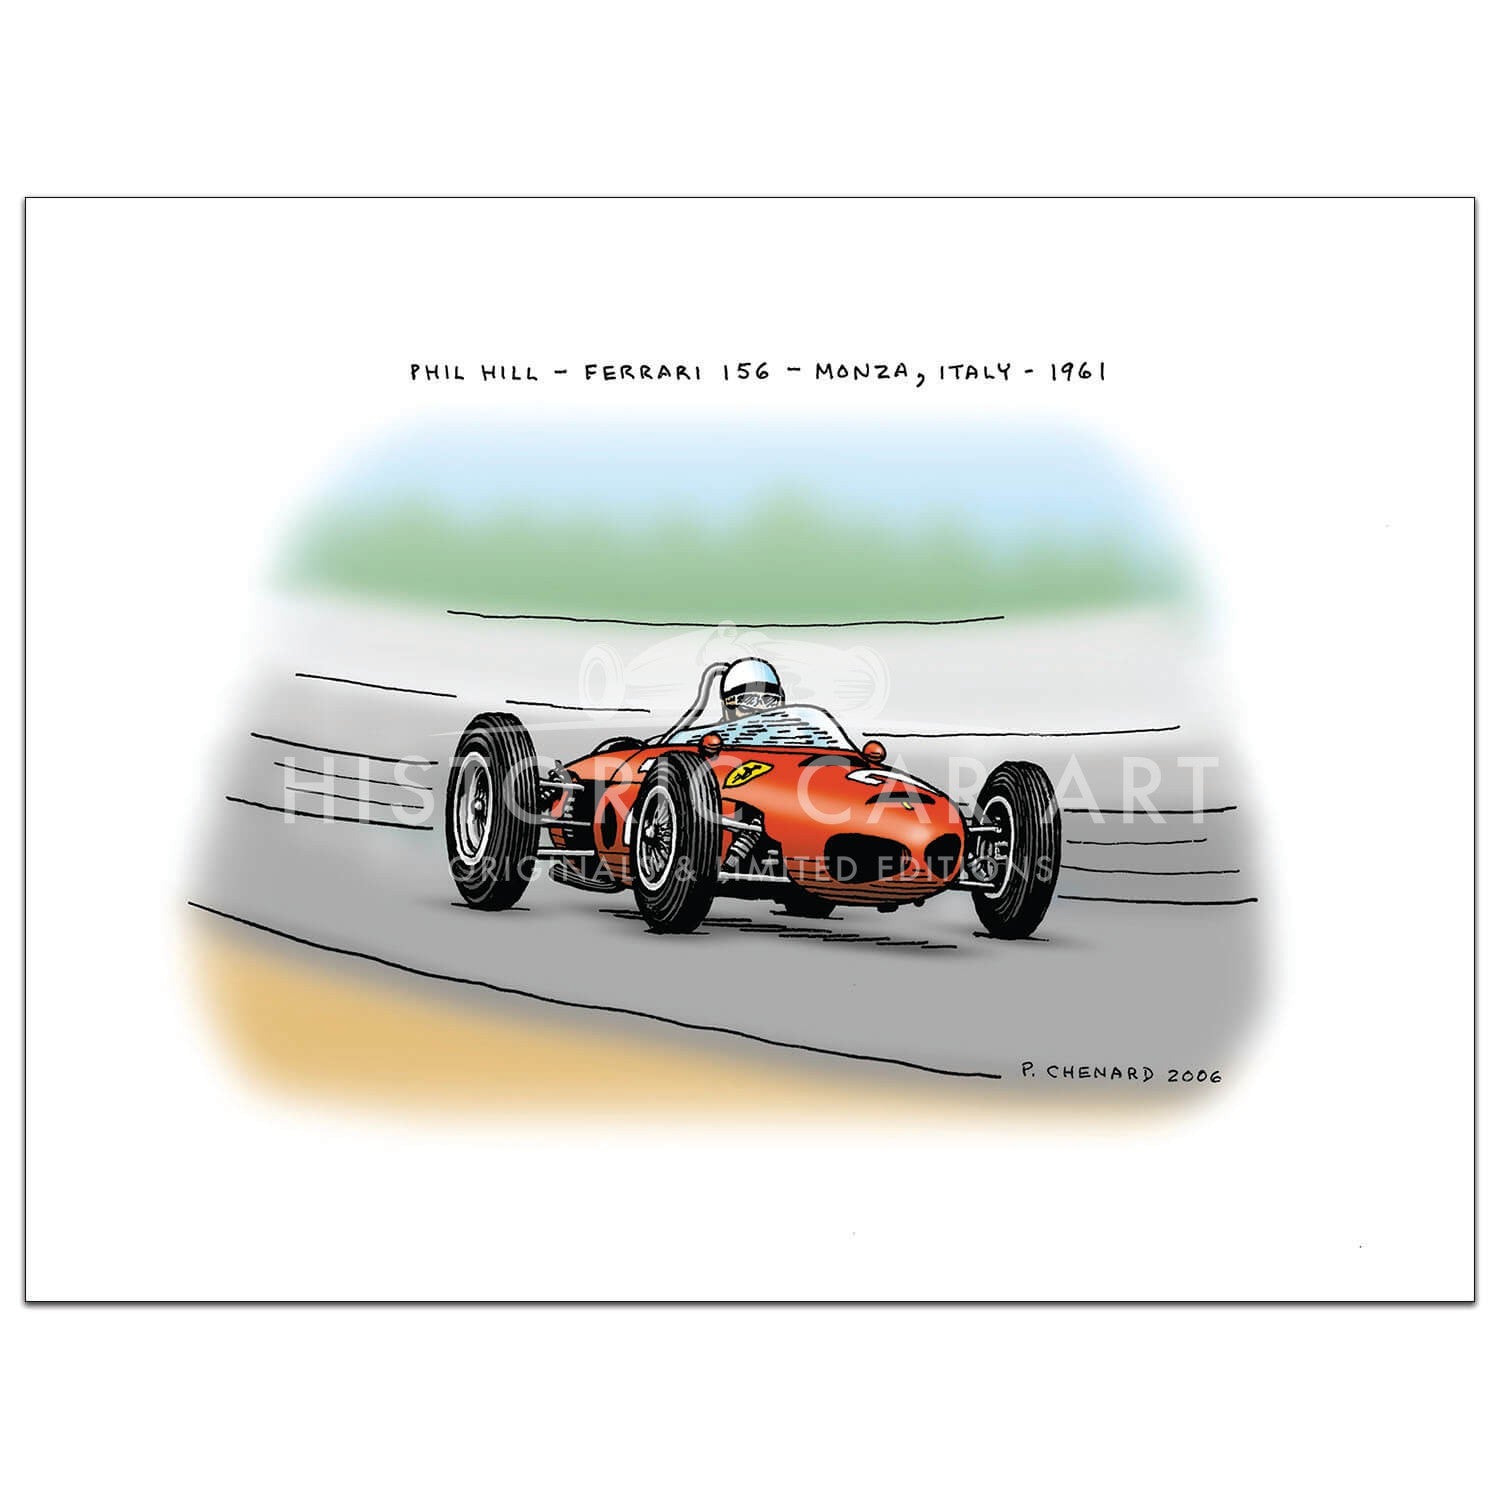 Phil Hill Series - Italian Grand Prix Monza 1961 - Print